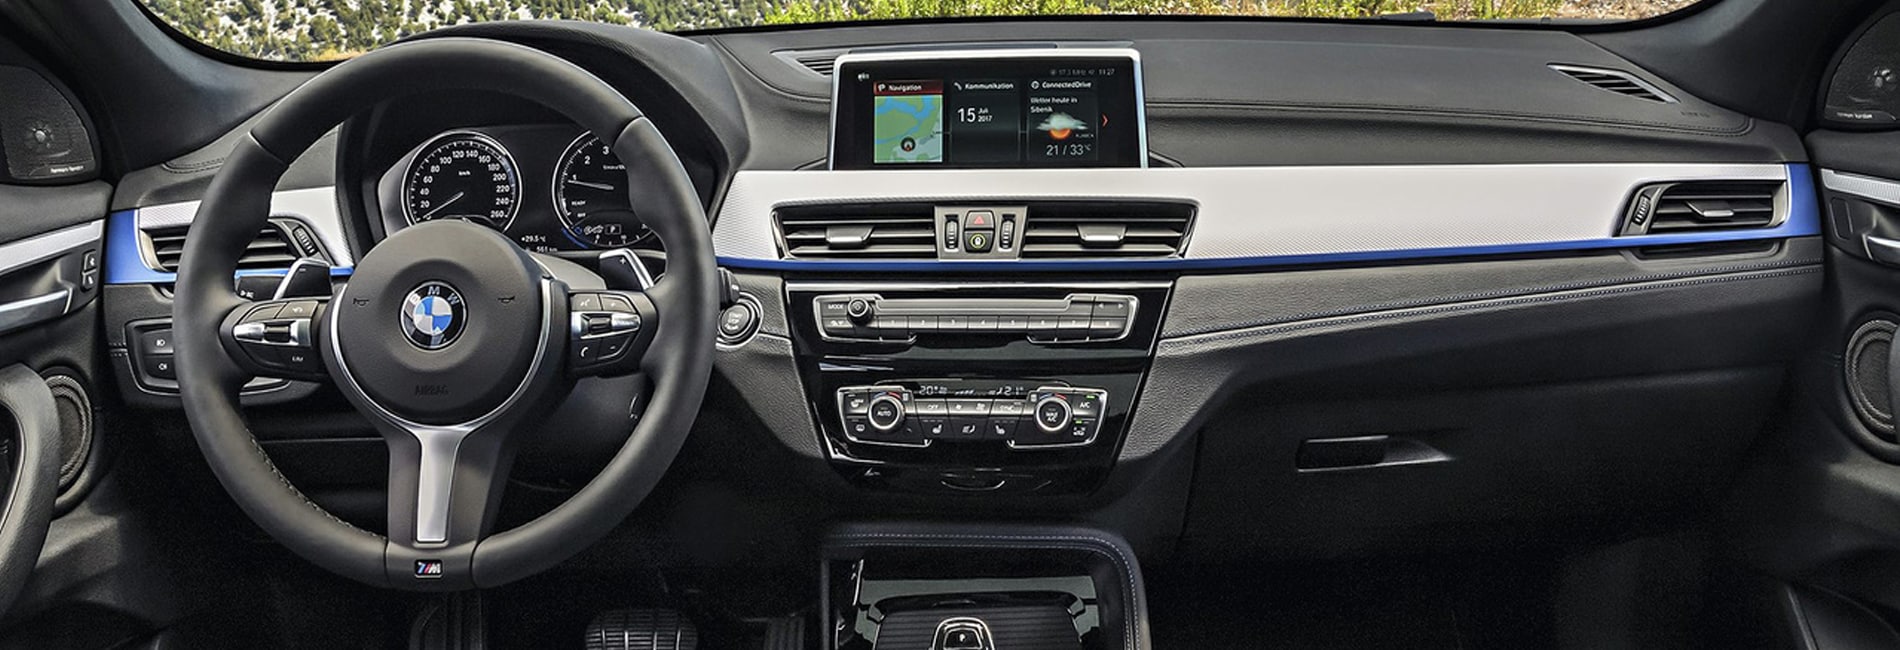 2020 BMW X2 Interior Features